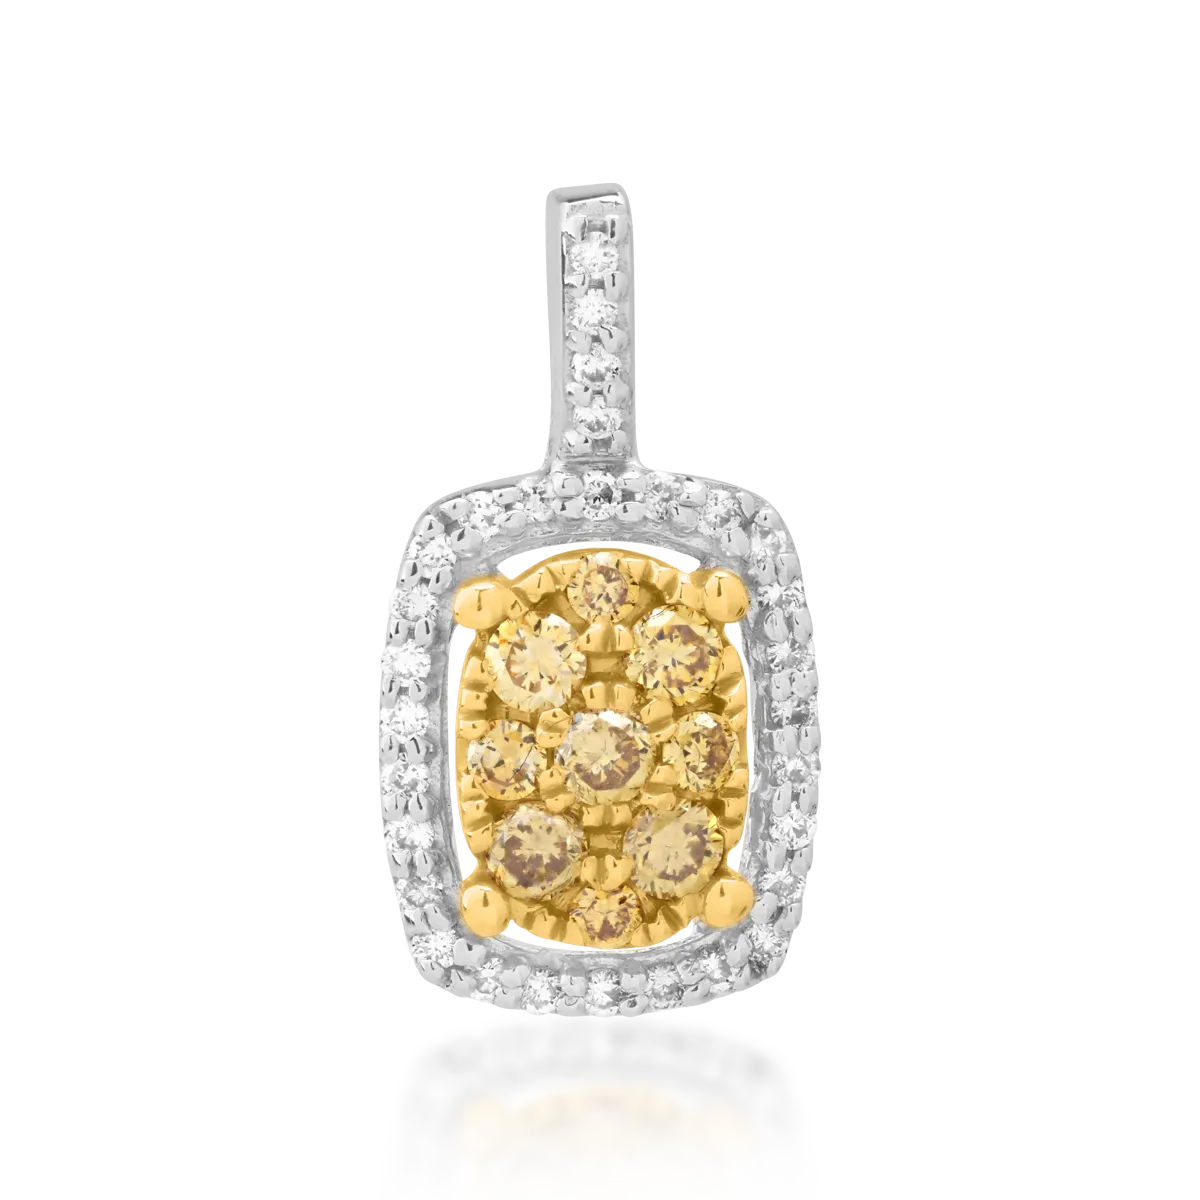 18K white gold pendant with 0.18ct yellow diamonds and 0.08ct transparent diamonds